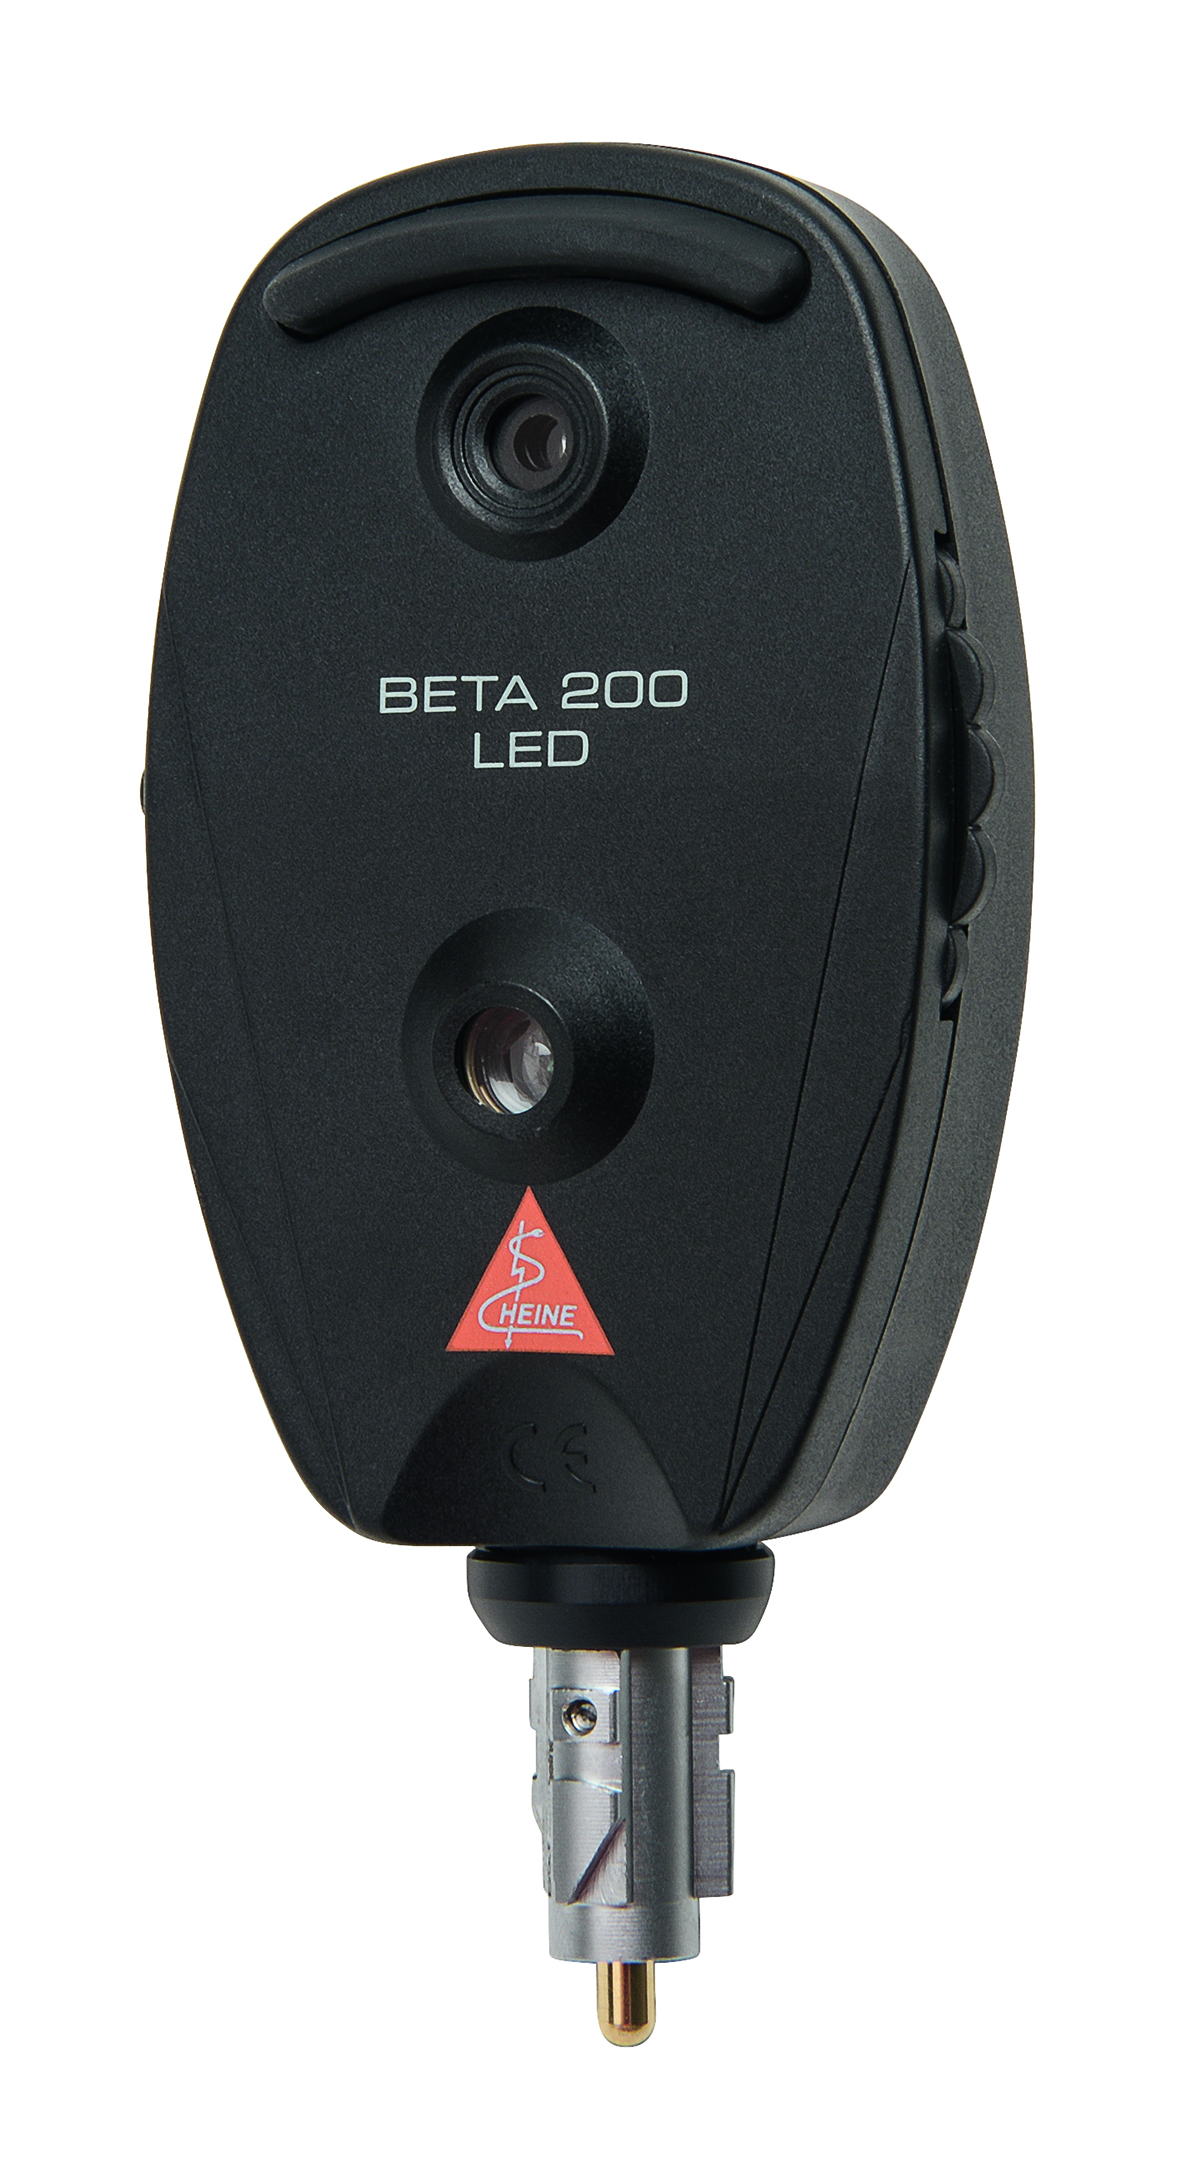 Heine ophthalmoscoopkop Beta 200 LED - 3,5 V